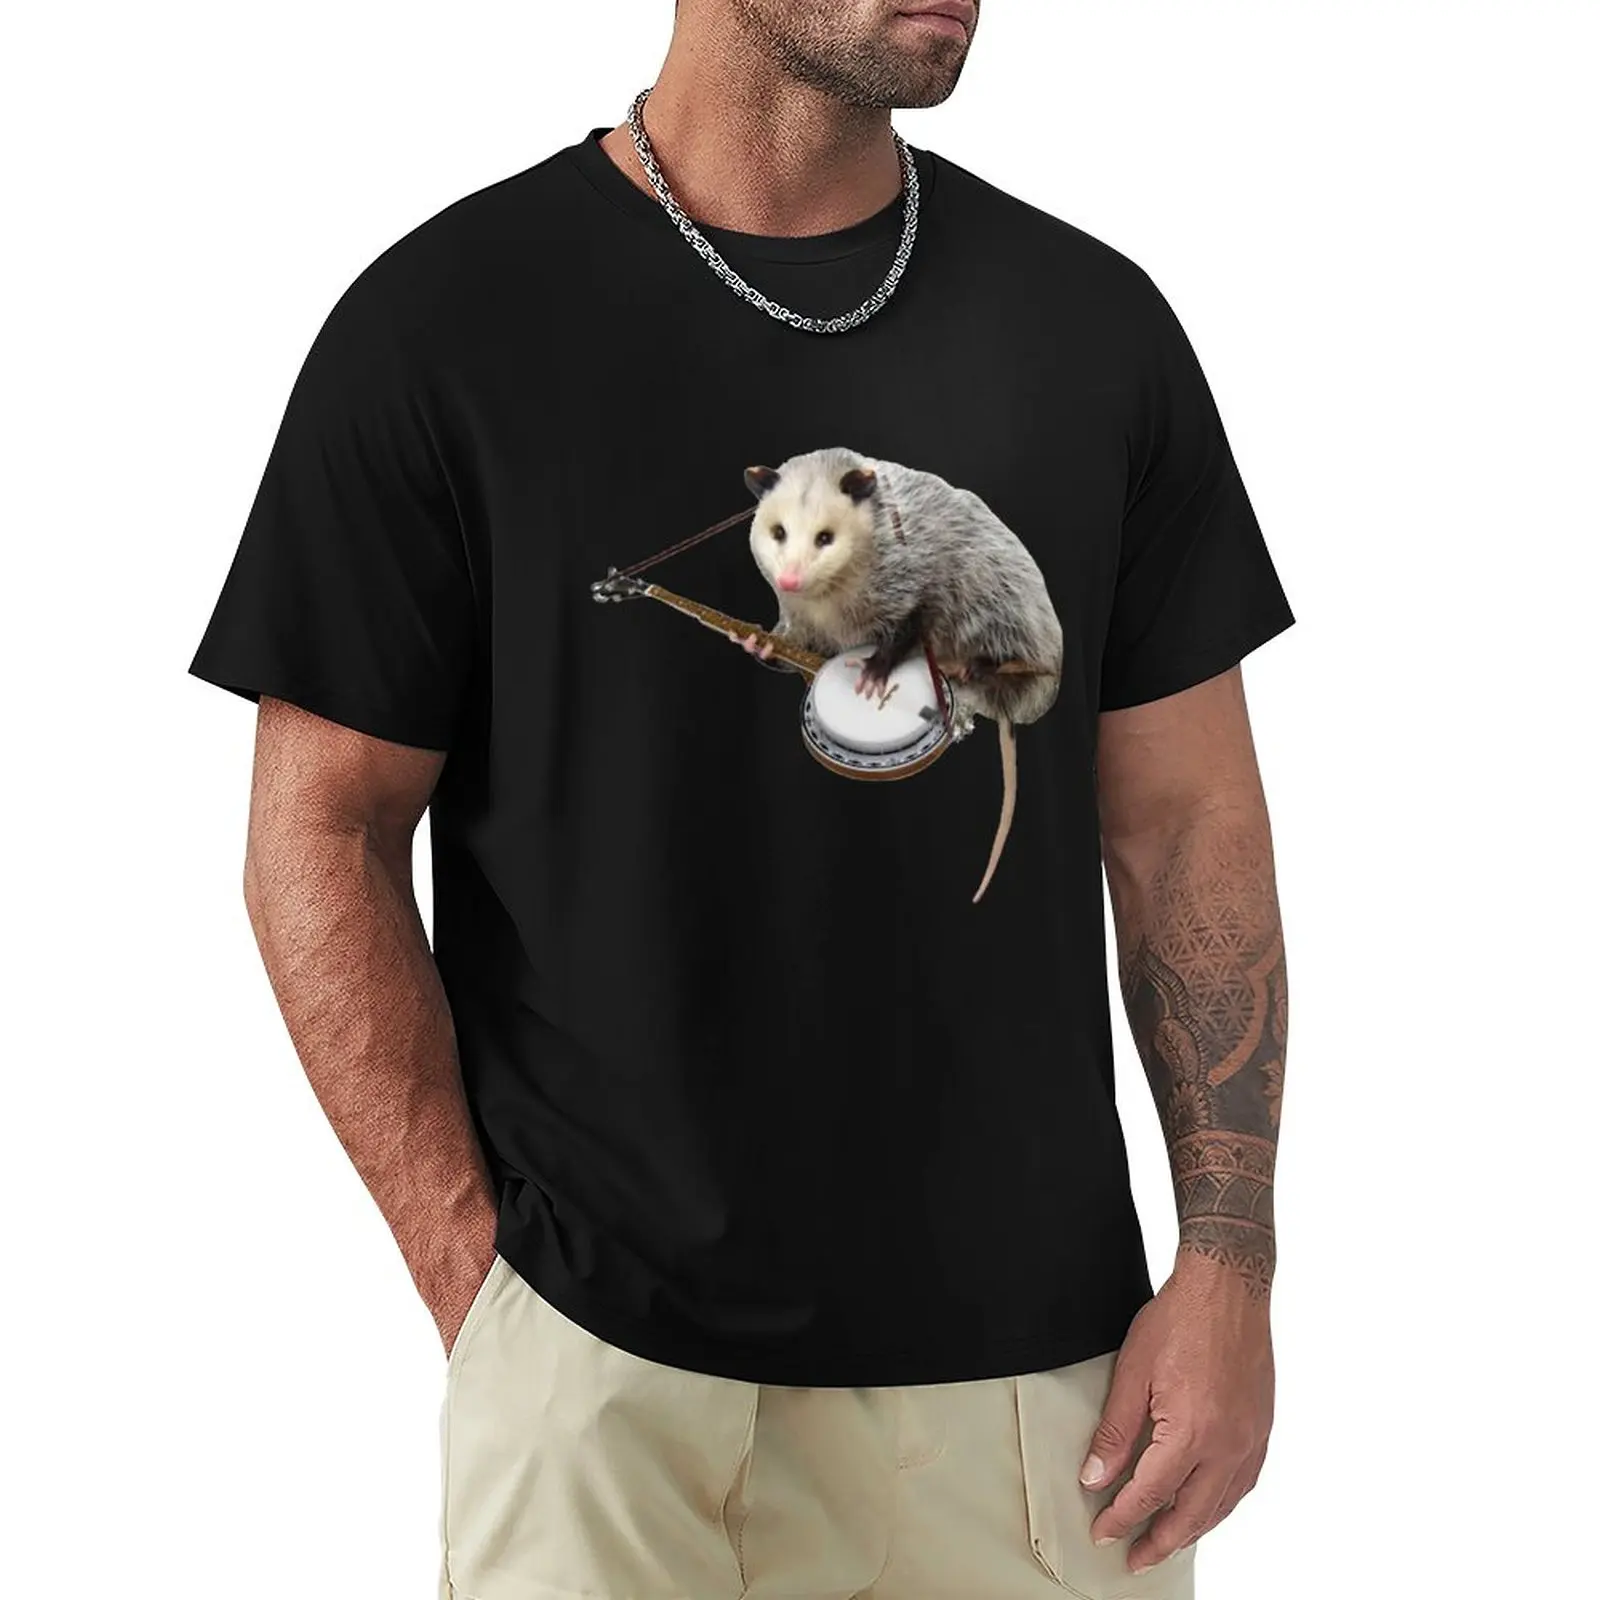 

Opossum Playing Banjo T-Shirt o-neck t-shirt shirts graphic tees mens graphic t-shirts hip hop Men's fashion t-shirts cotton top